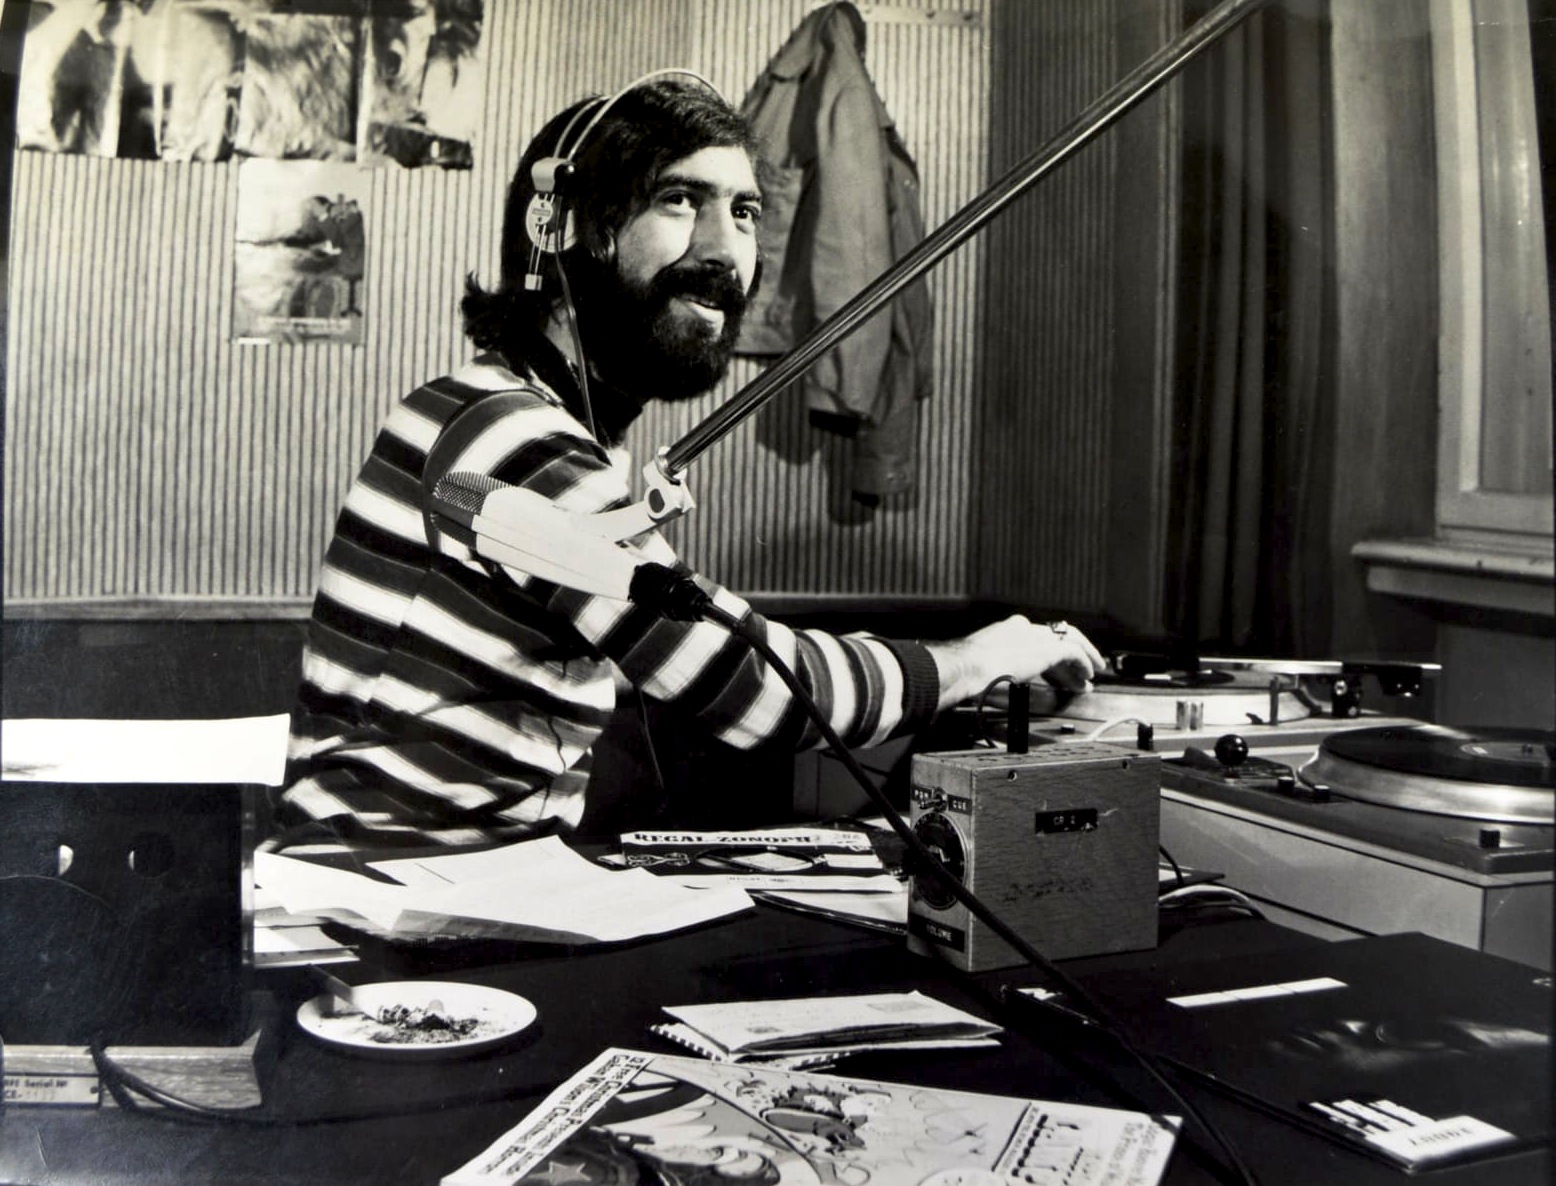 Cornel Chiriac during one of his broadcasts at Radio Free Europe